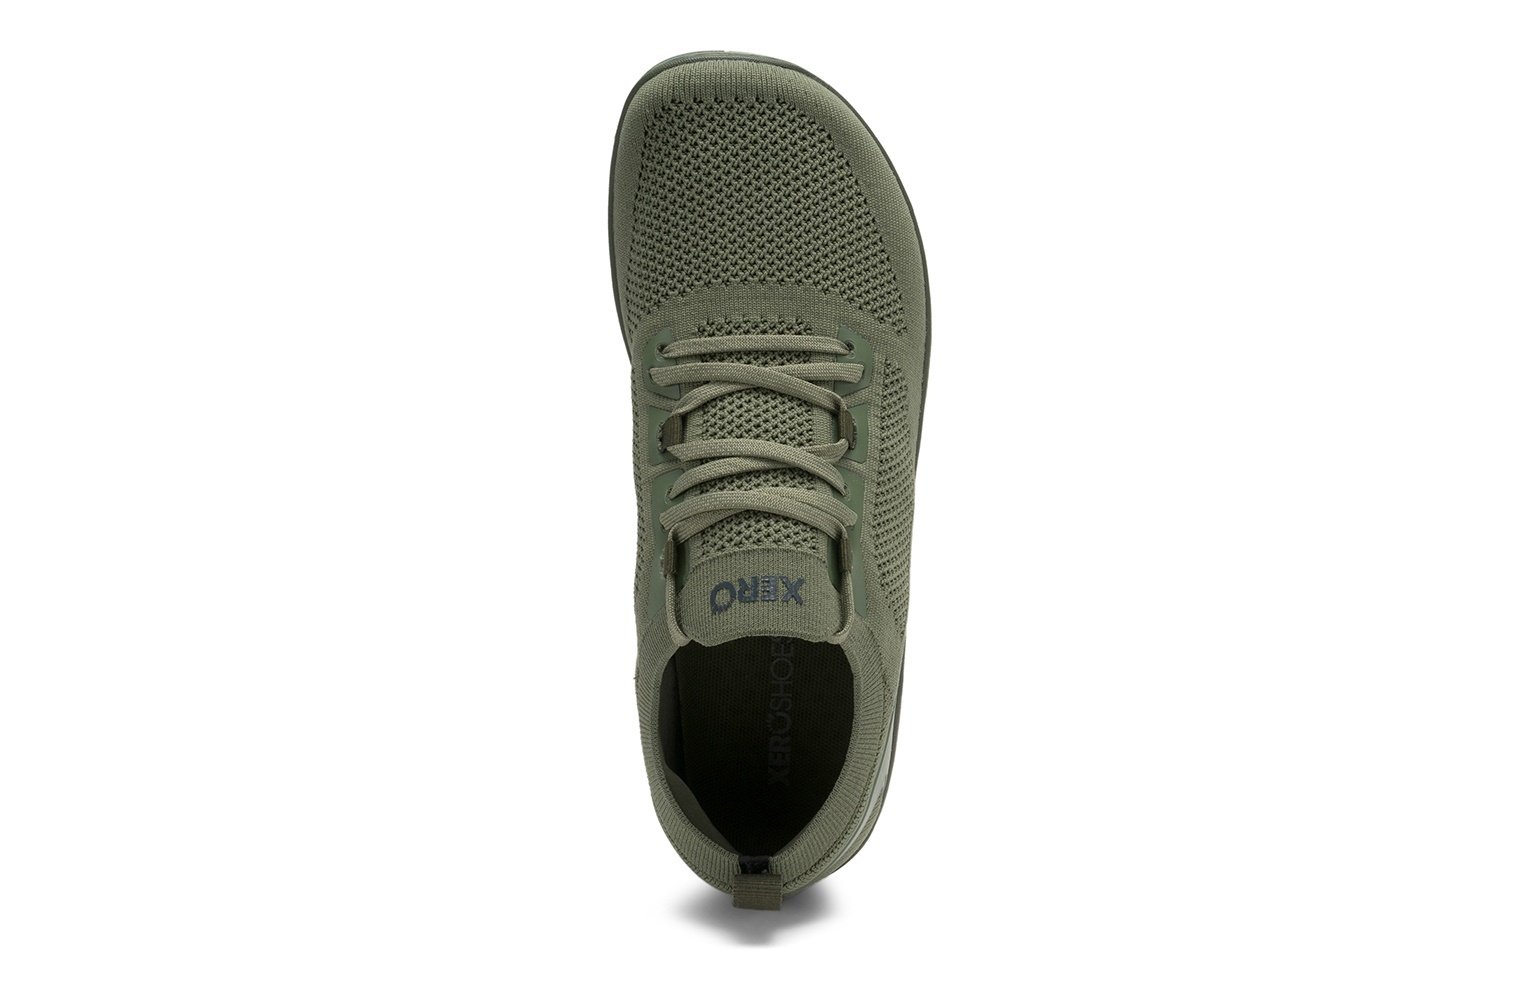 Xero Shoes, Nexus Knit - NEXM-OLIV - olive, heren, maat 45 eu